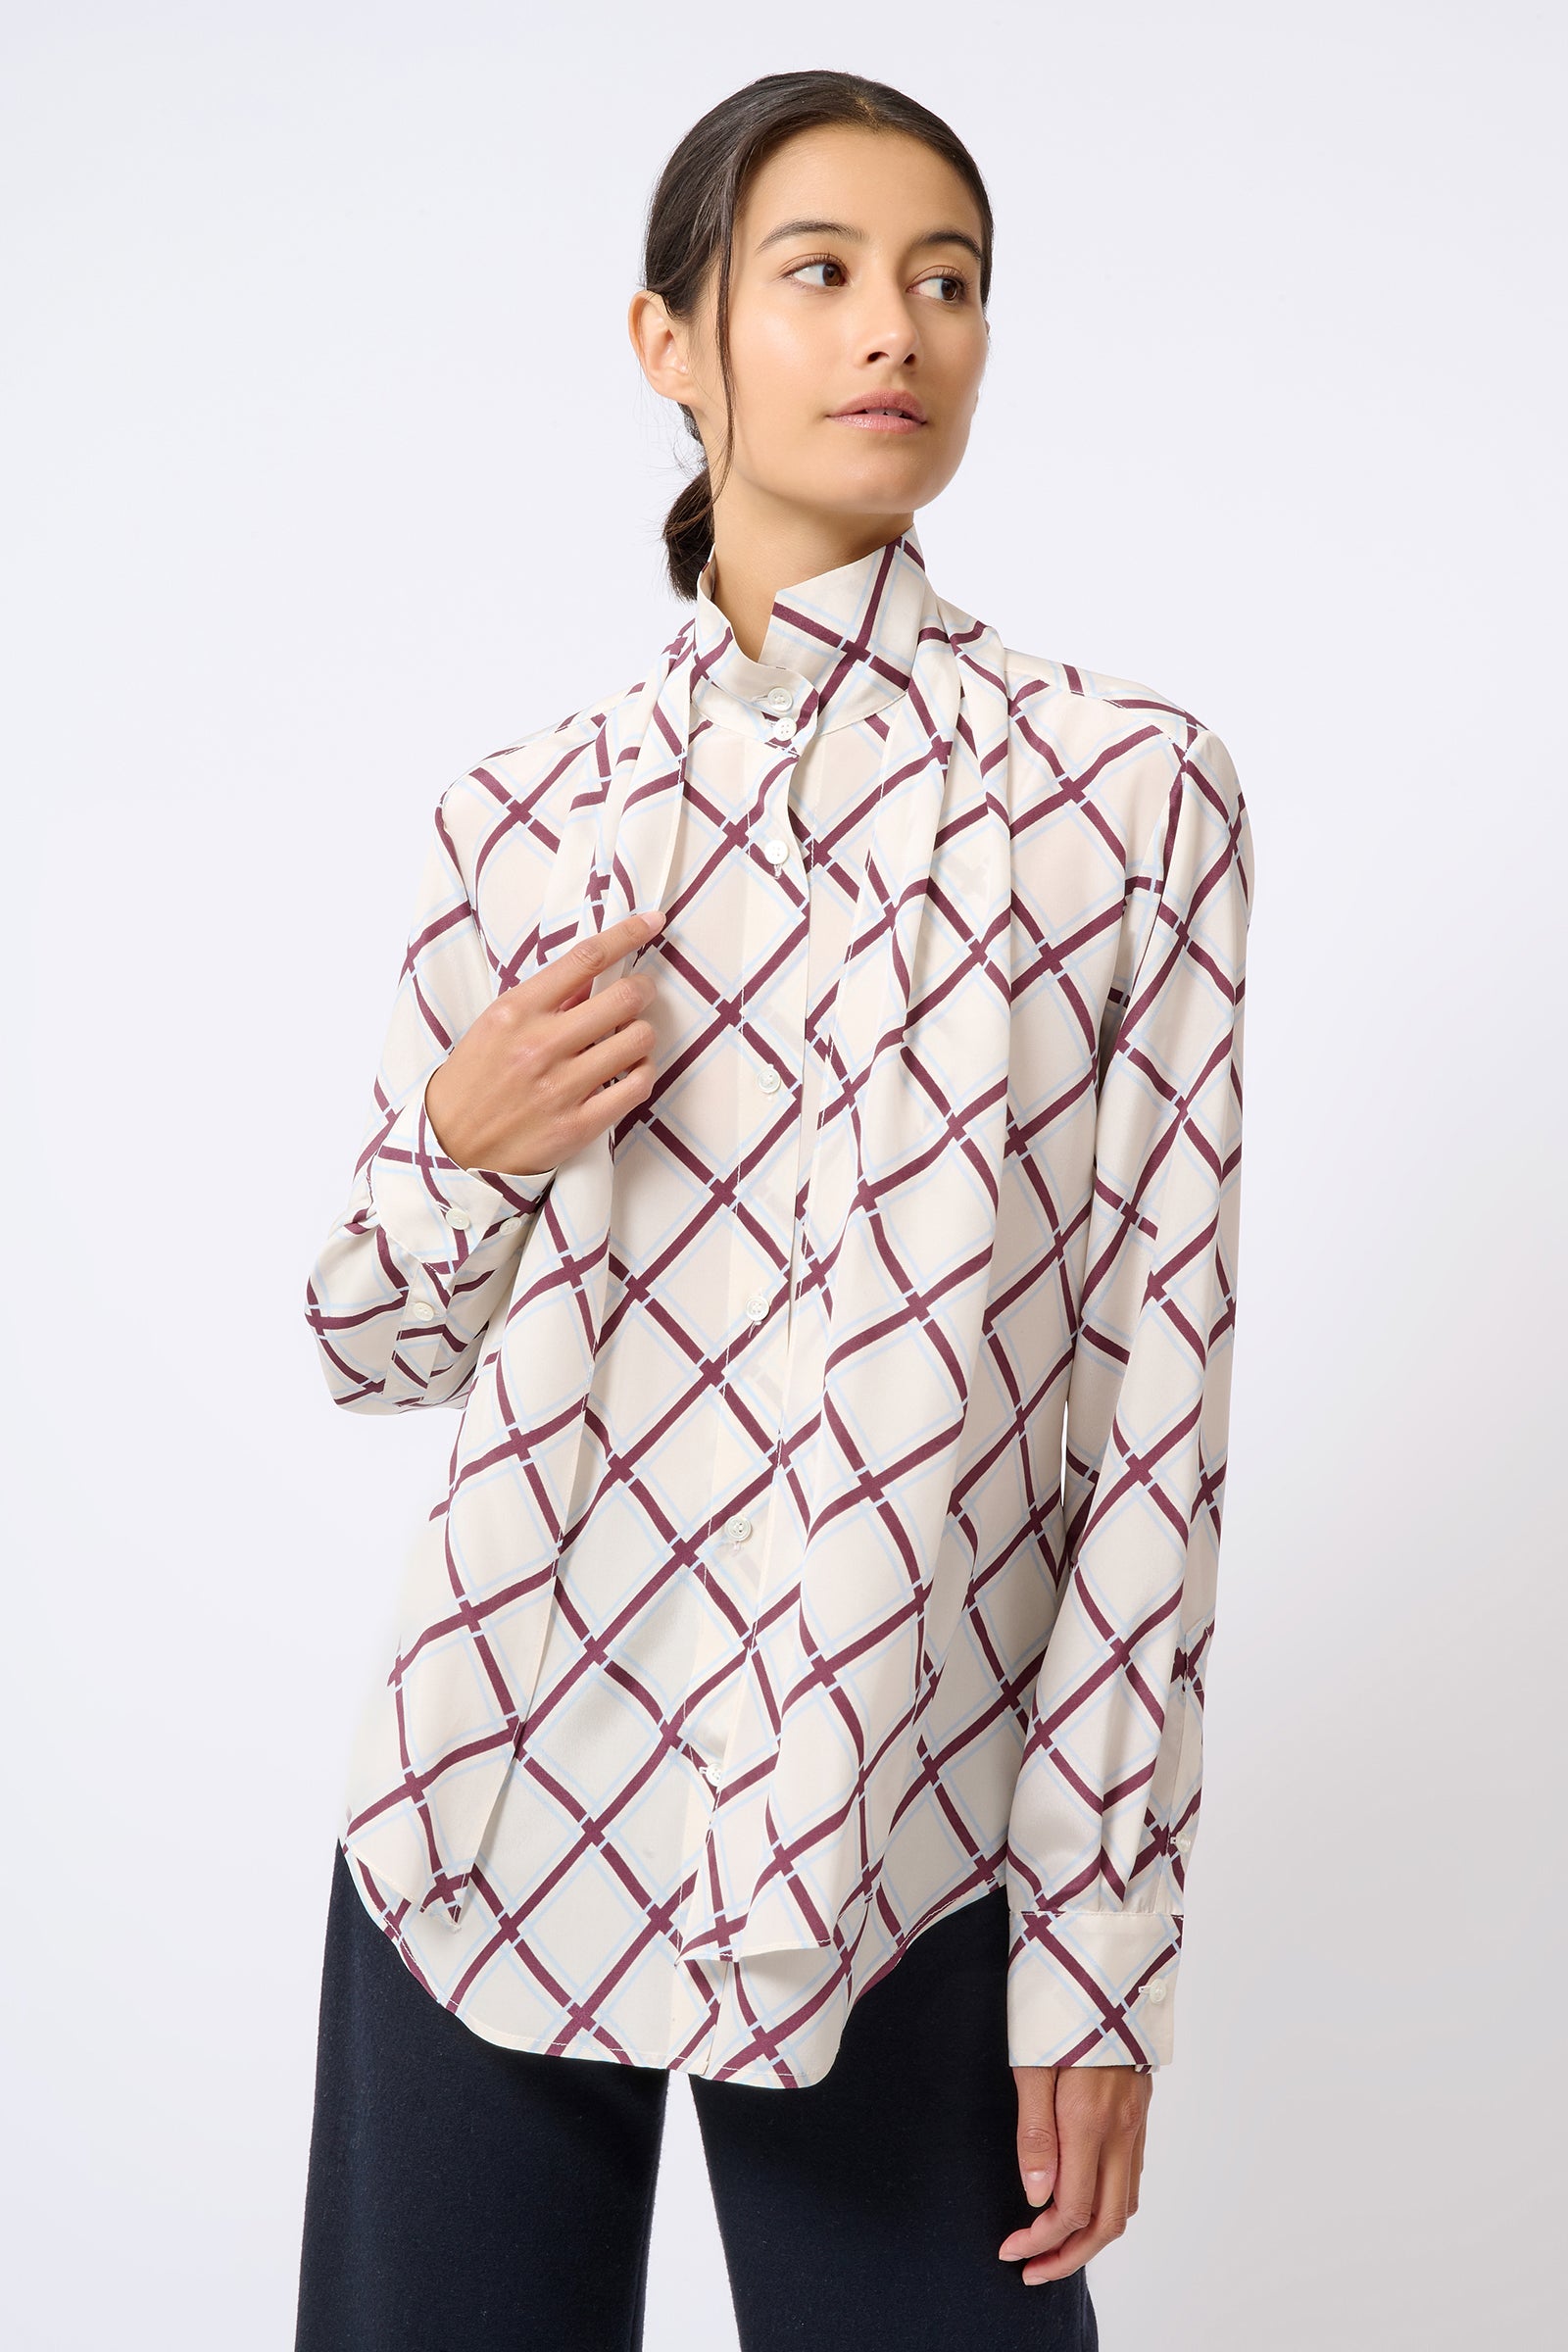 Kal Rieman Scarf Tie Blouse in Diagonal Print on Model Looking Left Front View